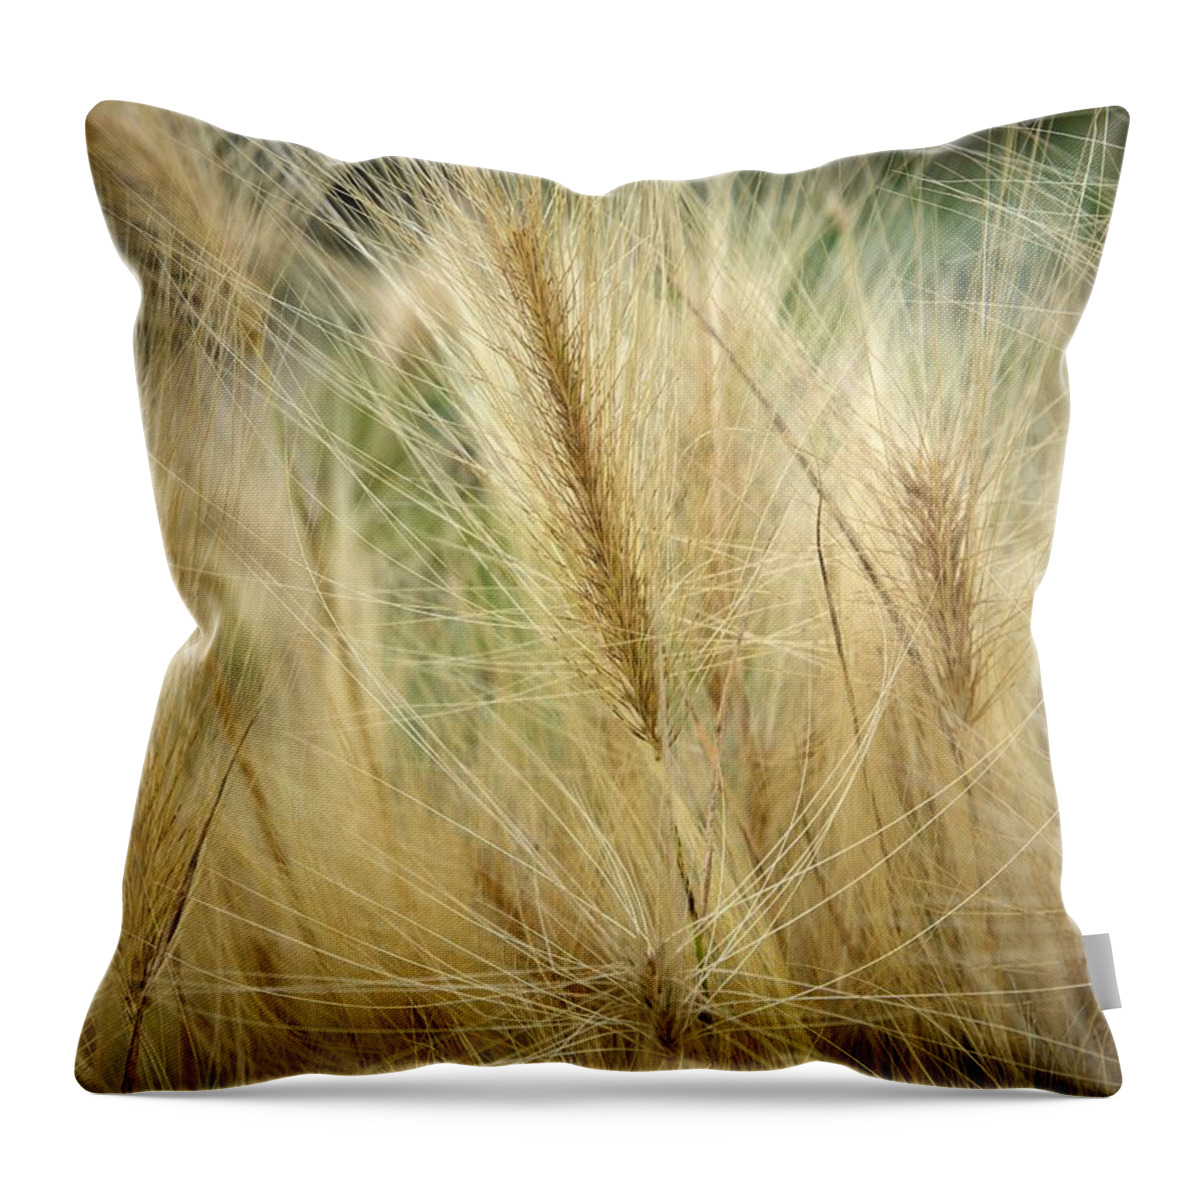 Lehtokukka Throw Pillow featuring the photograph Foxtail barley by Jouko Lehto